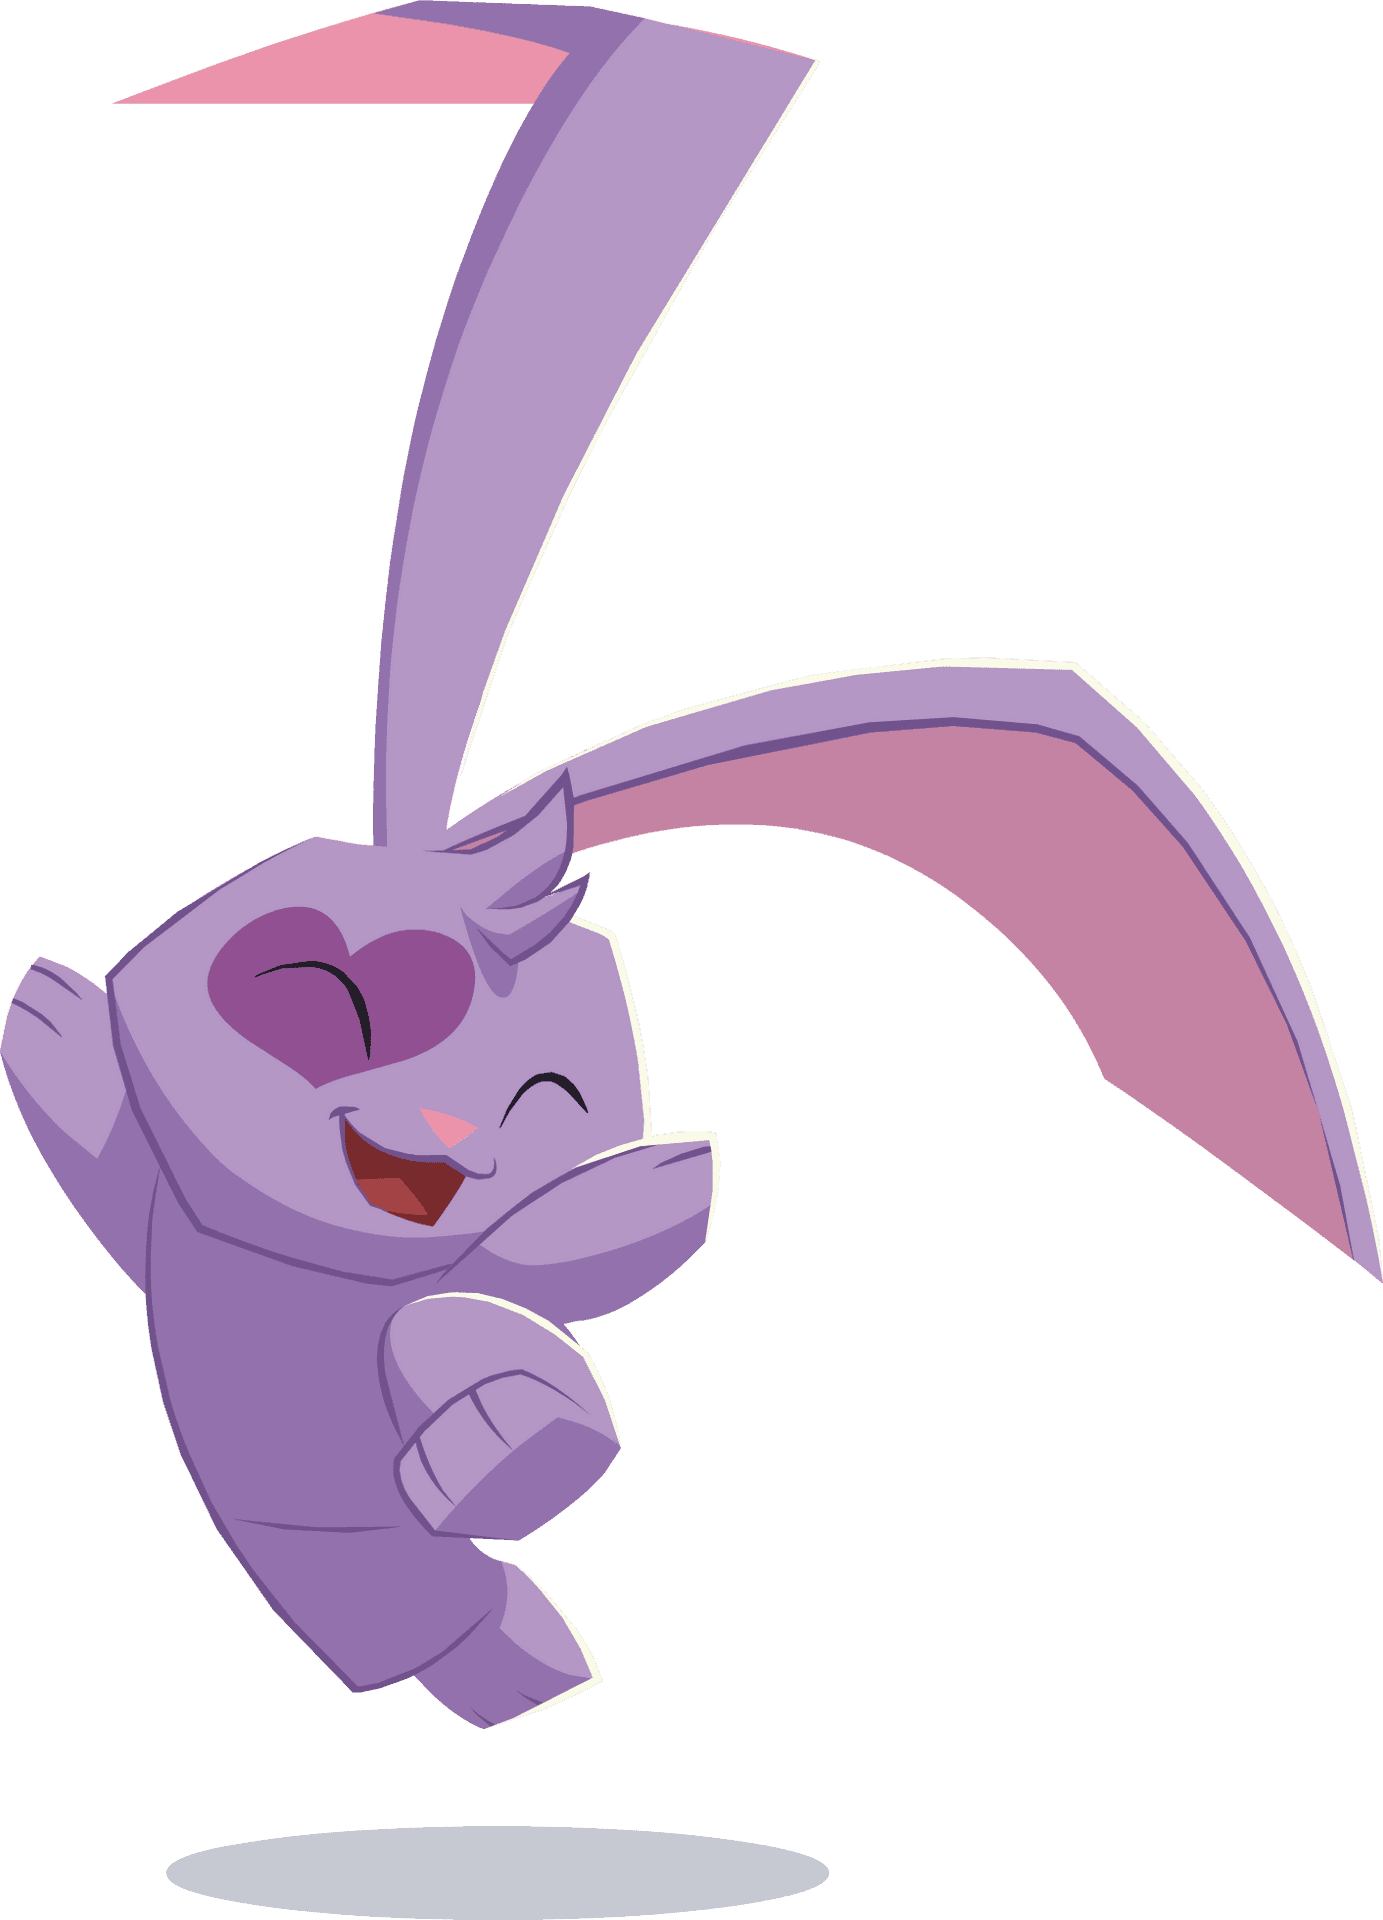 Happy Purple Bunny Animal Jam PNG image